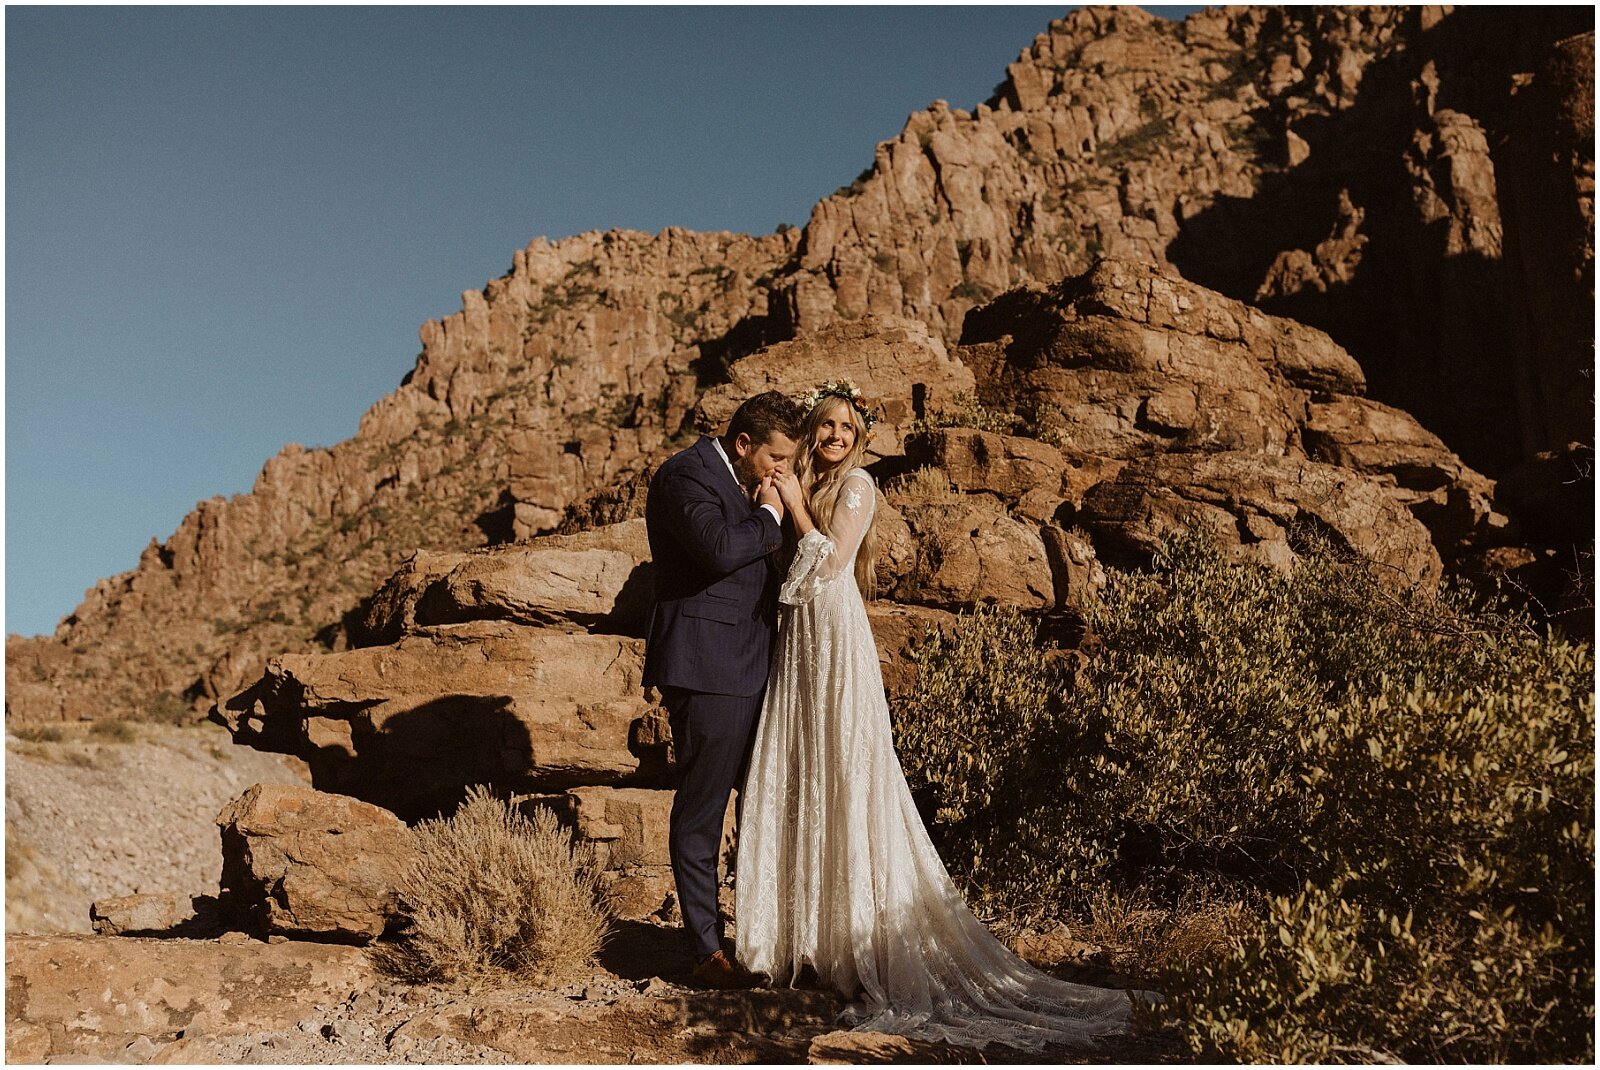 desert bridal session - erika greene photography - arizona couples photographer_0011.jpg